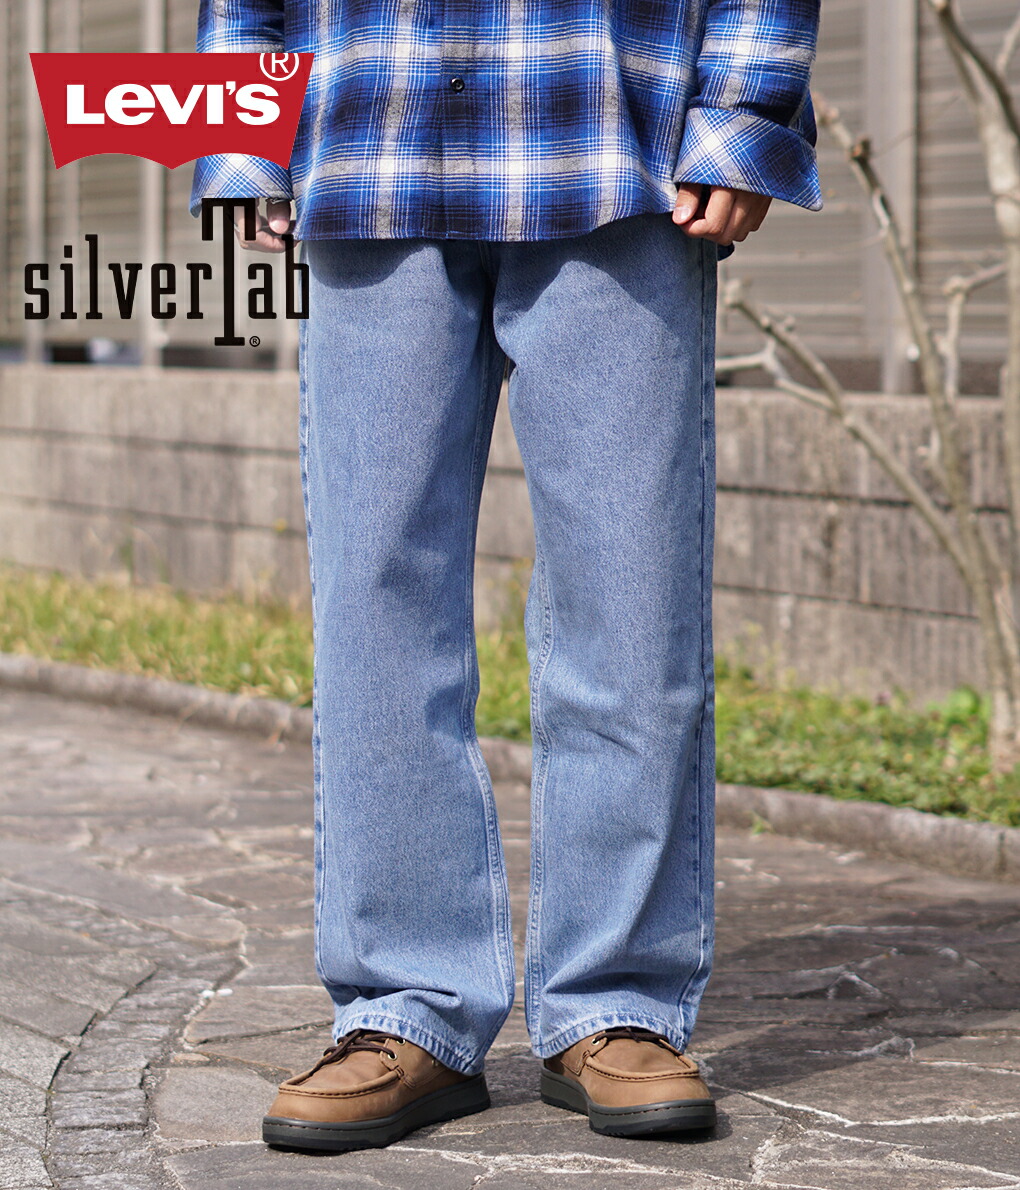 LEVI'S / リーバイス ： SILVERTAB LOOSE ： A3421-0001 :A3421-0001 